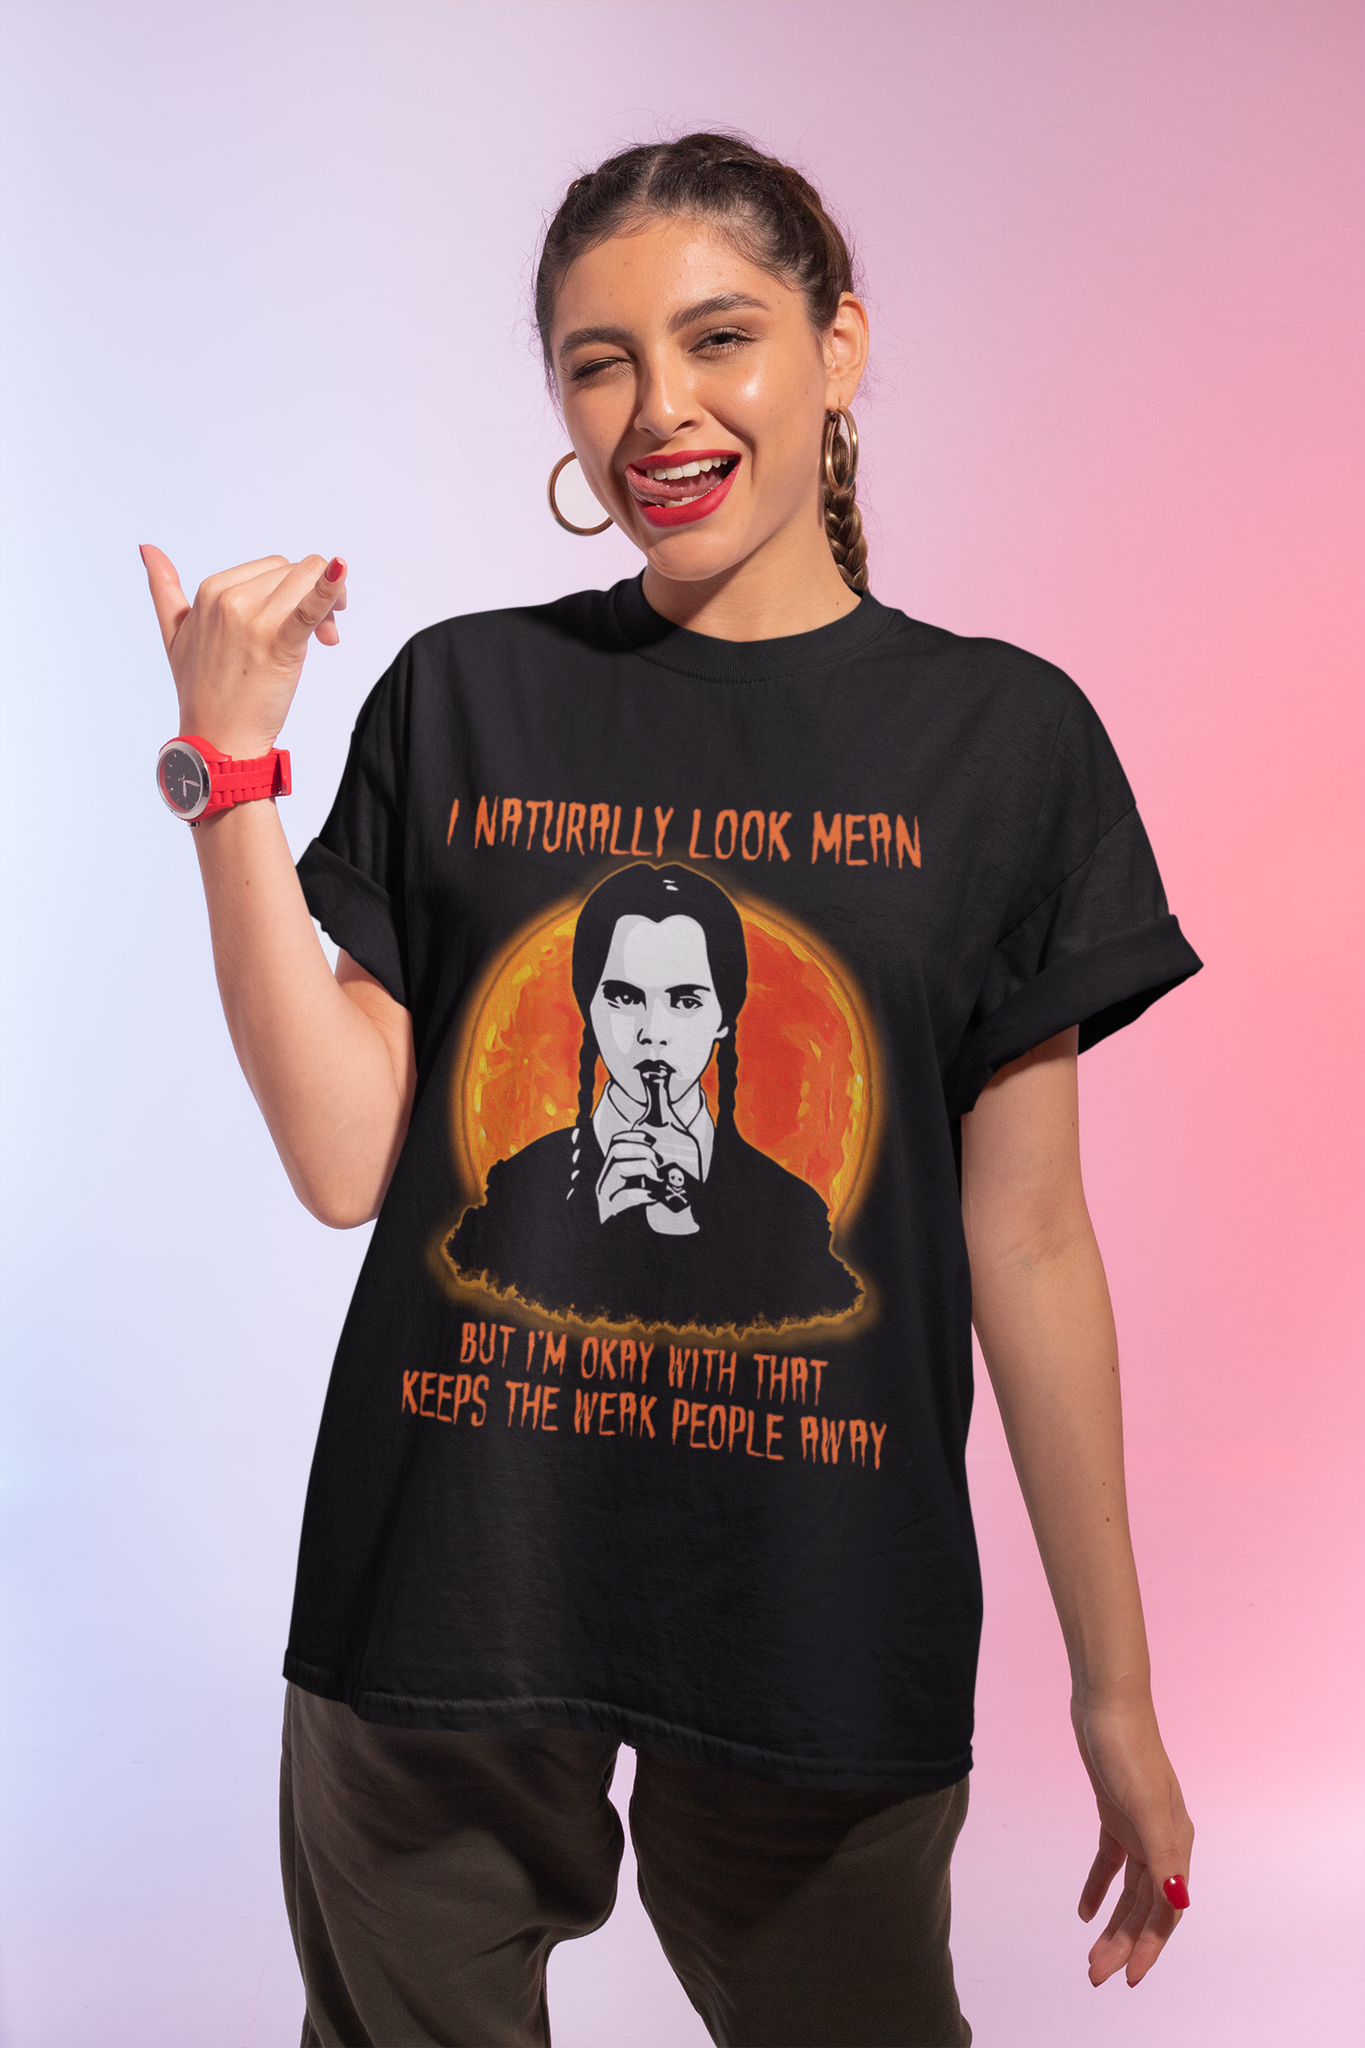 Addams Family T Shirt, Wednesday Addams T Shirt, I Naturally Look Mean Tshirt, Halloween Gift